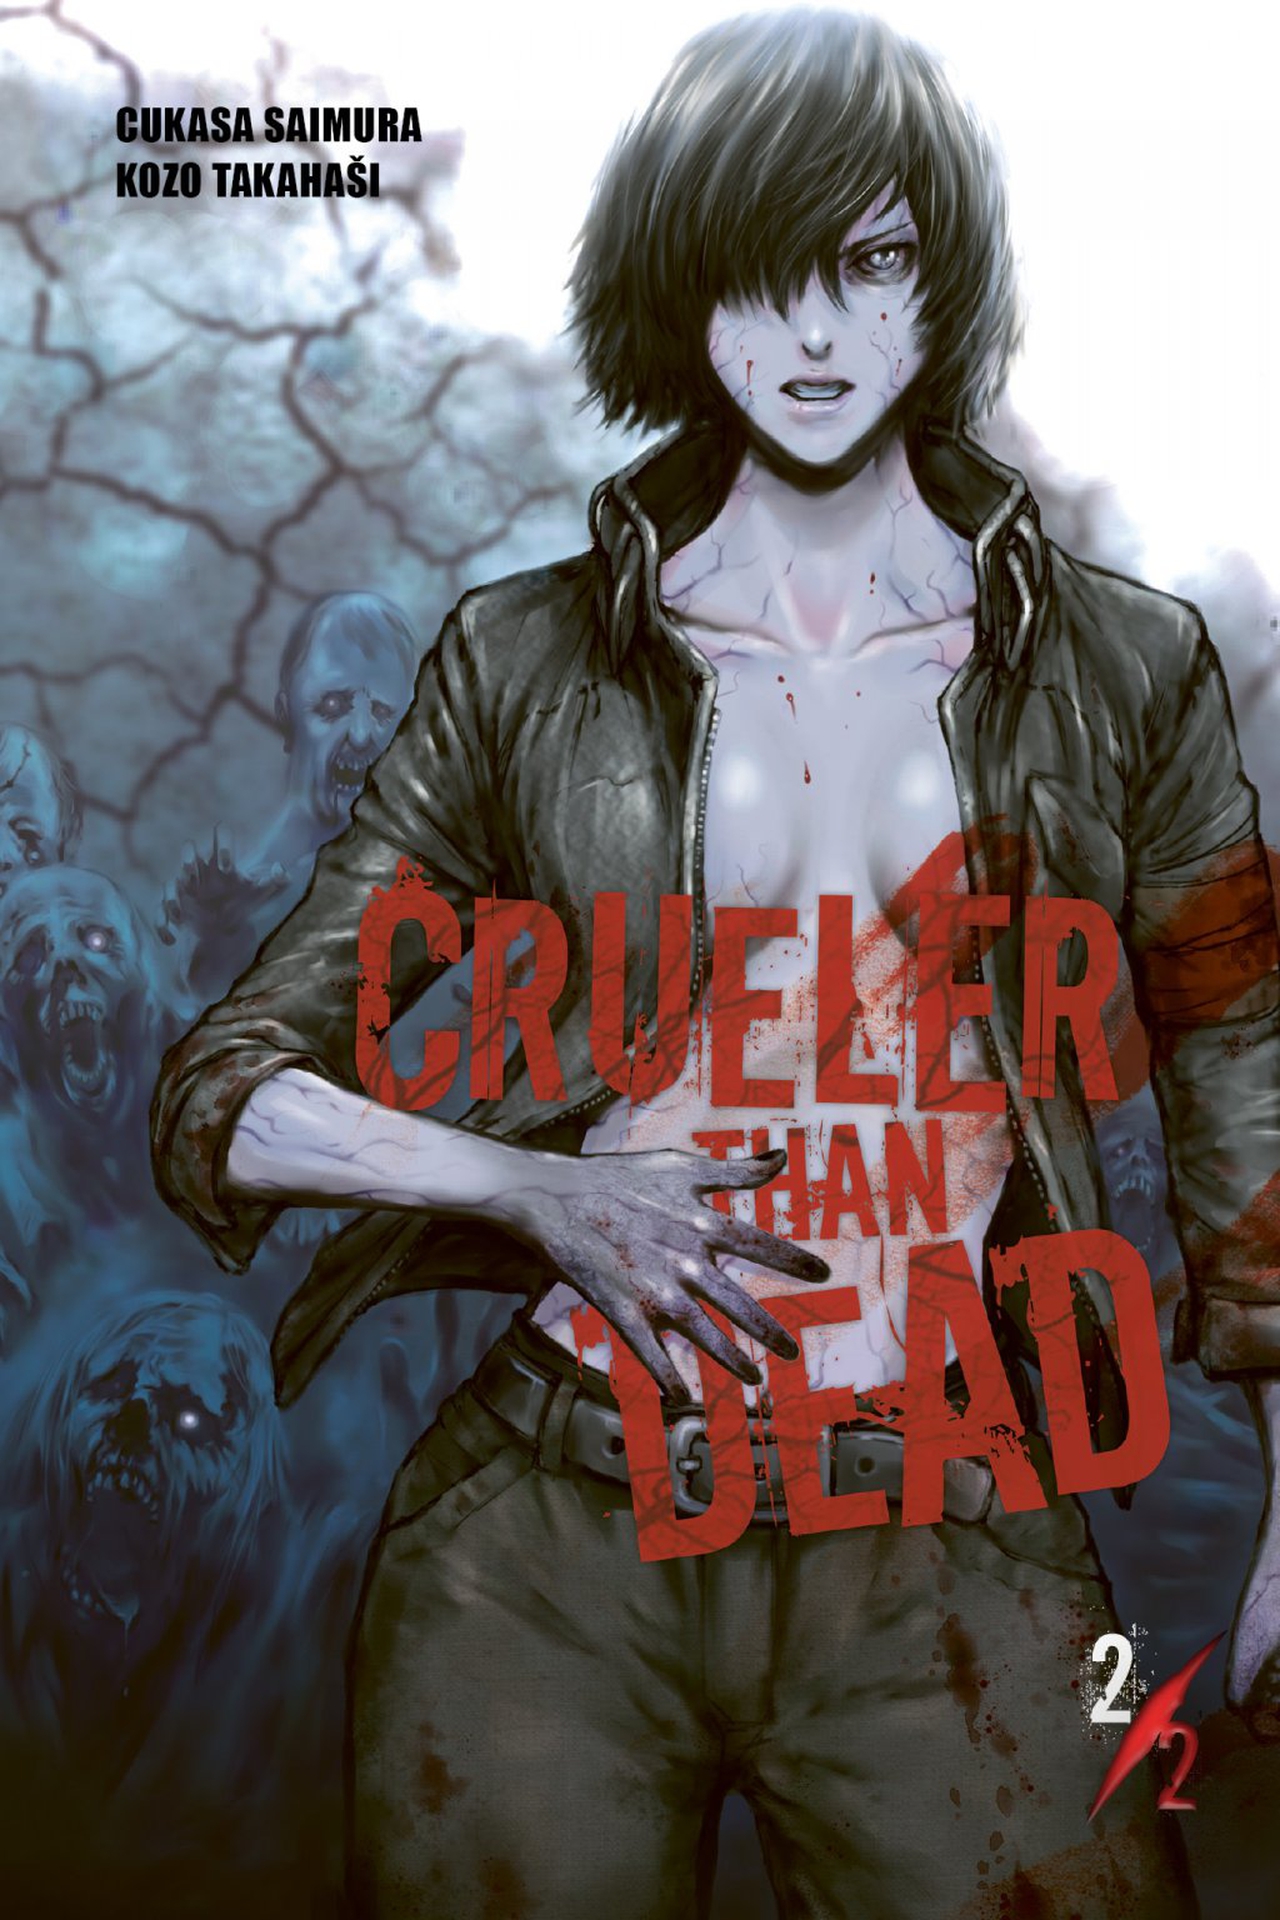 Crueler than Dead 2 [Saimura Cukasa]